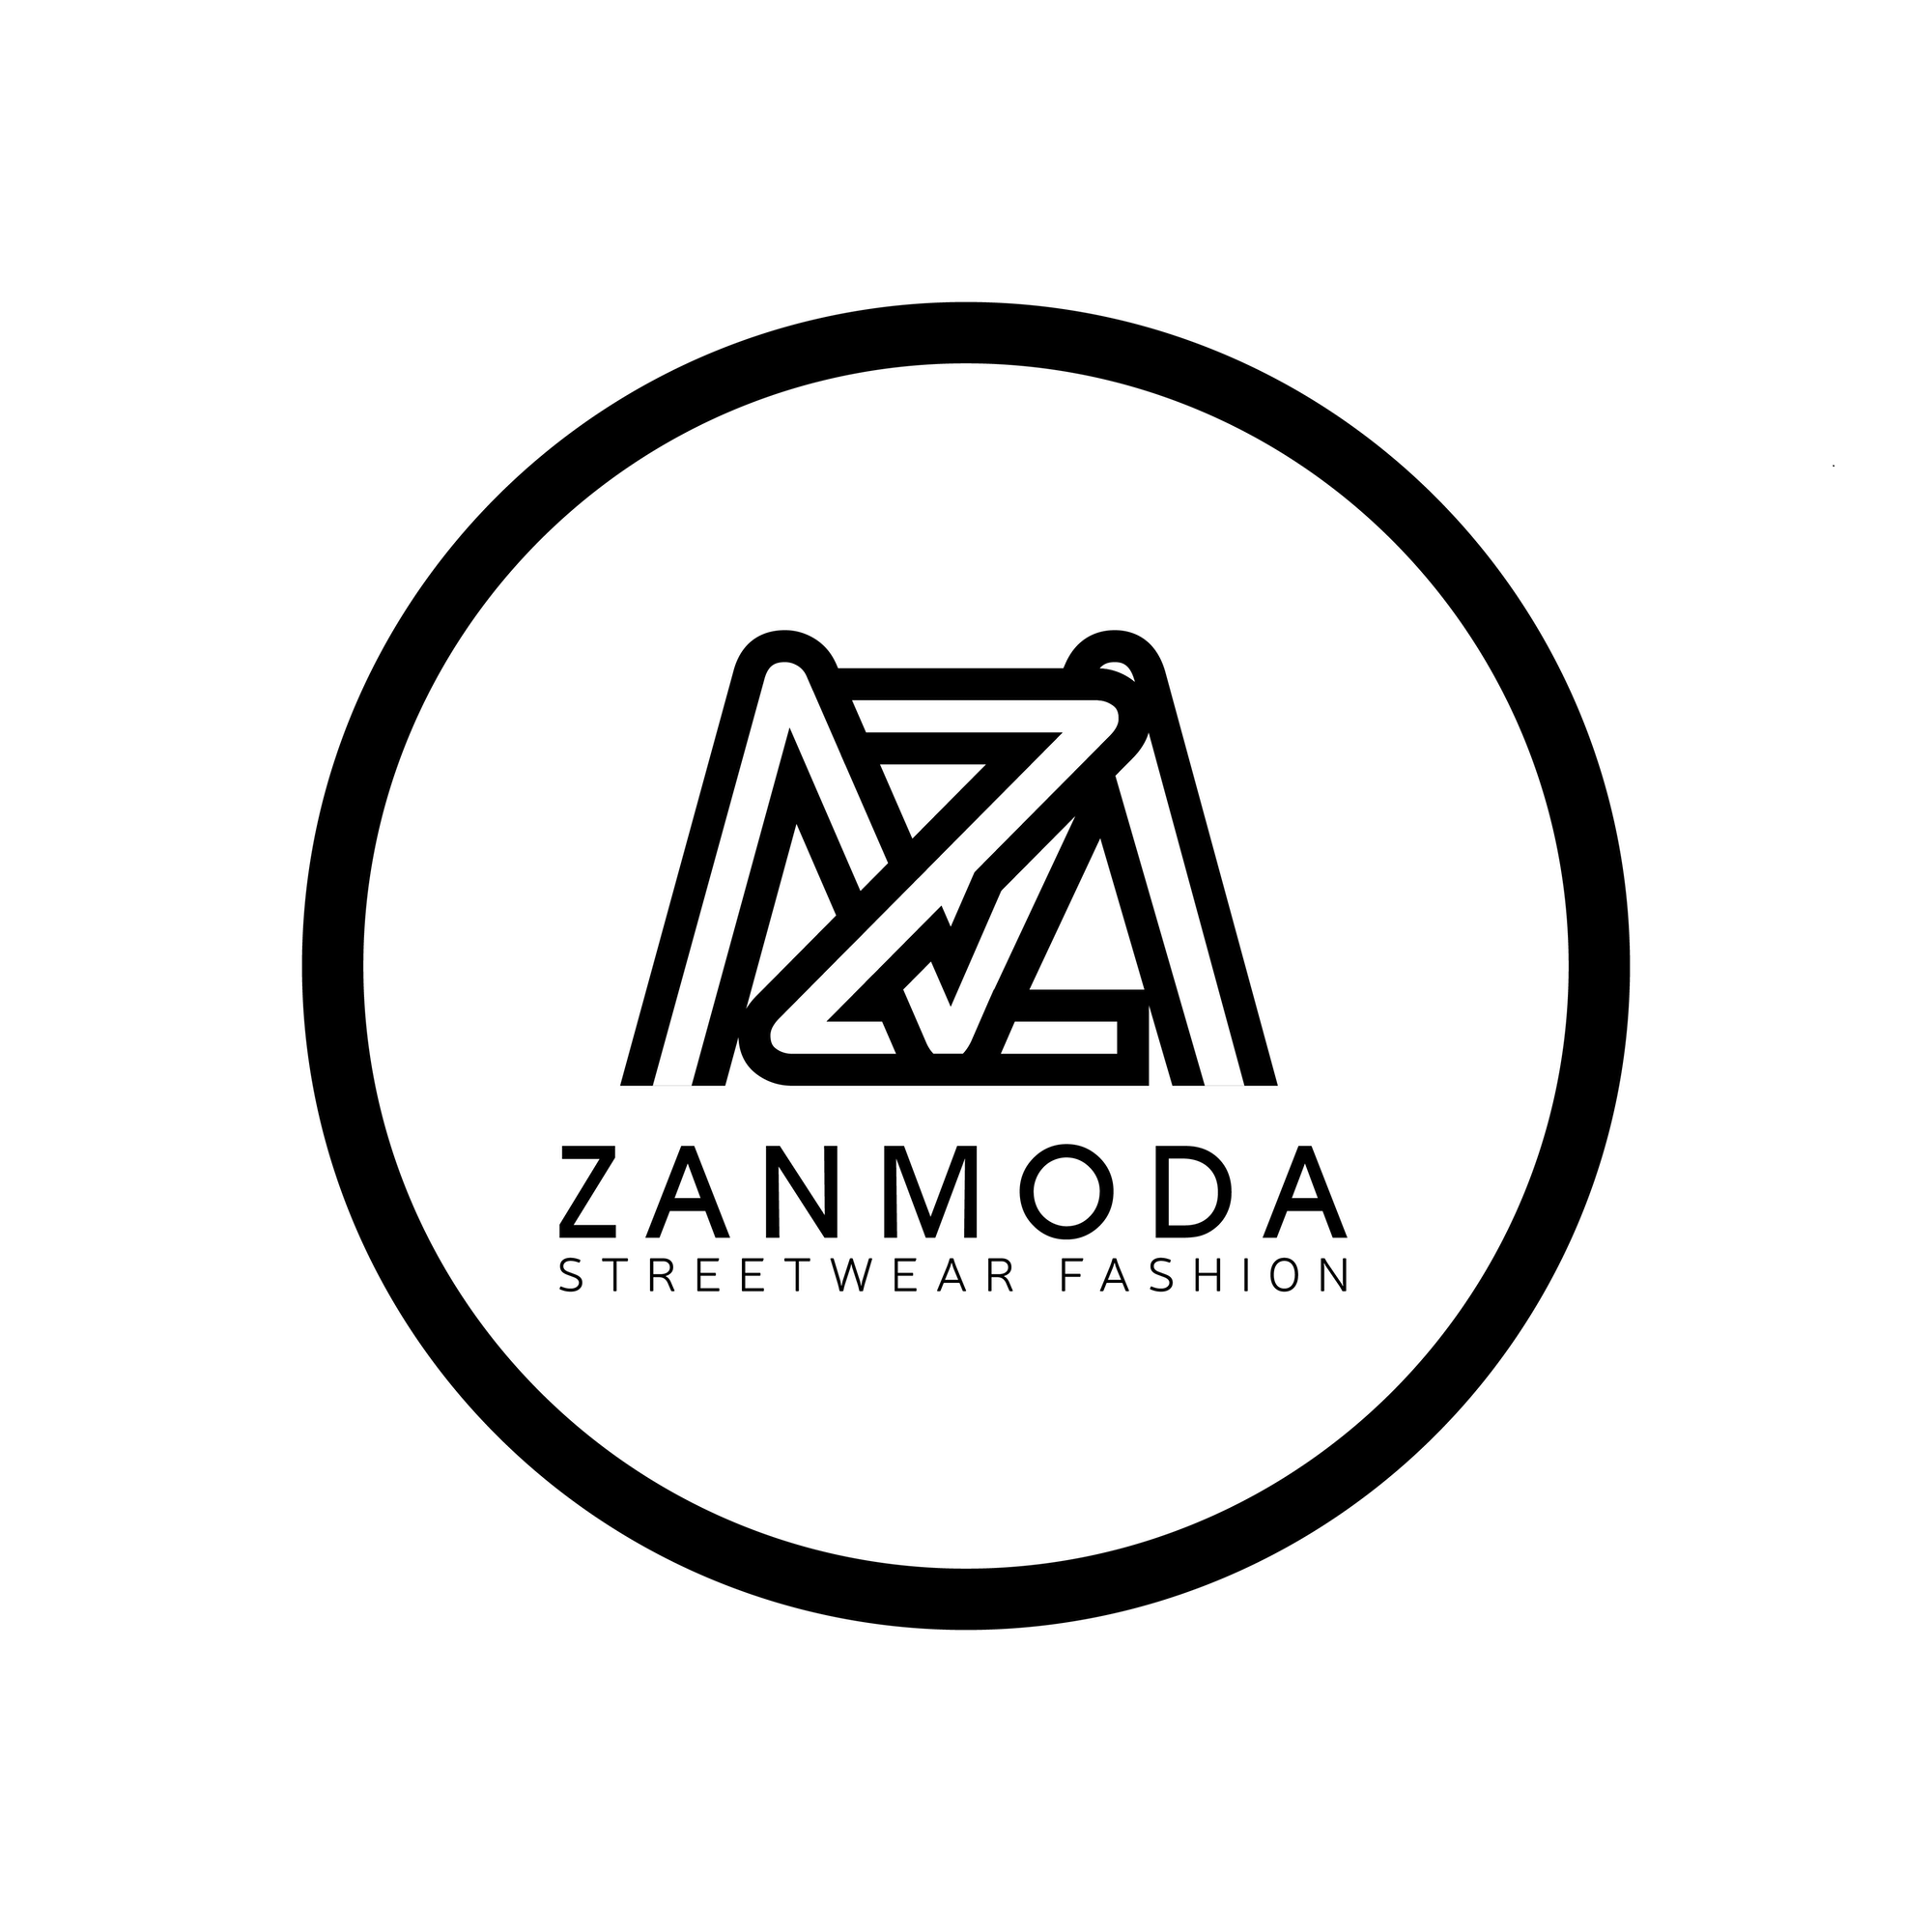 Zanmoda Streetwear Fashion